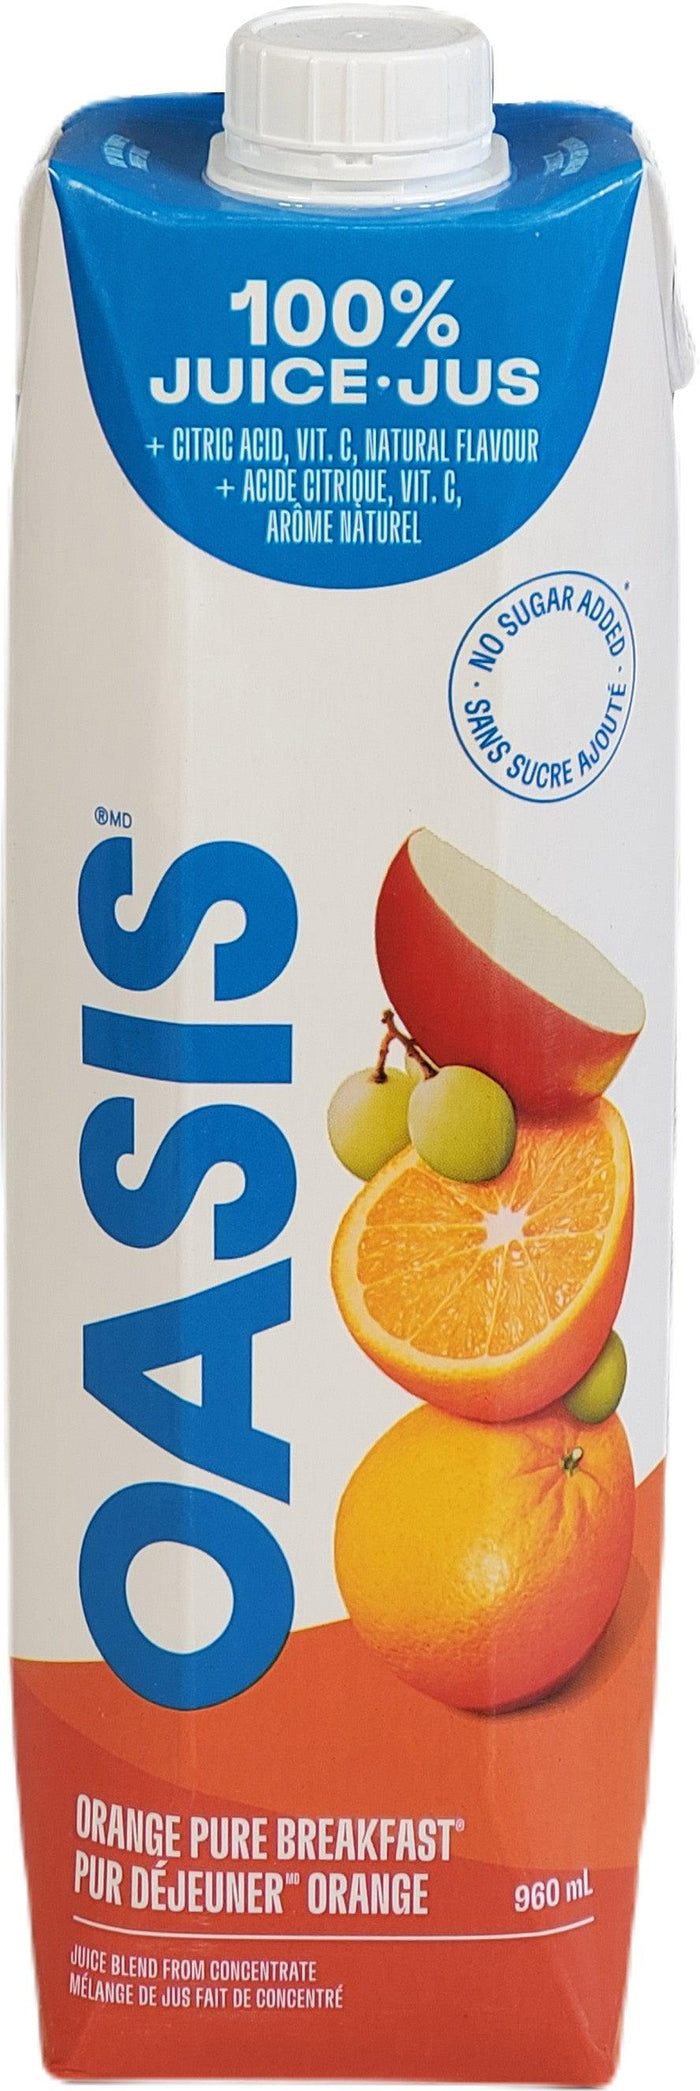 Oasis - Juice - Orange Pure Breakfast - Tetra